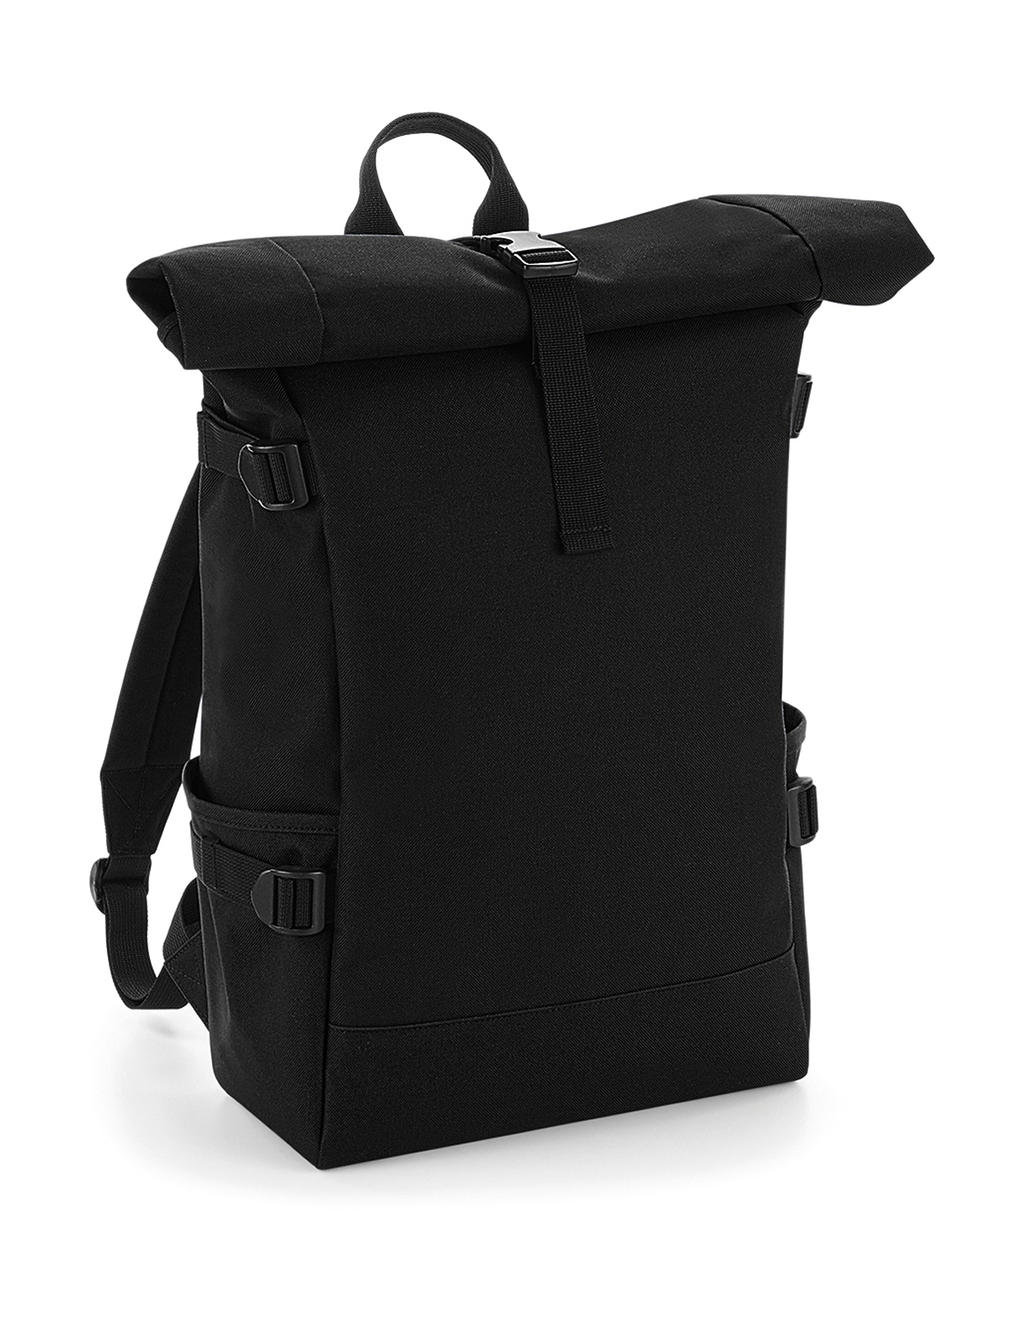  Block Roll-Top Backpack in Farbe Black/Black